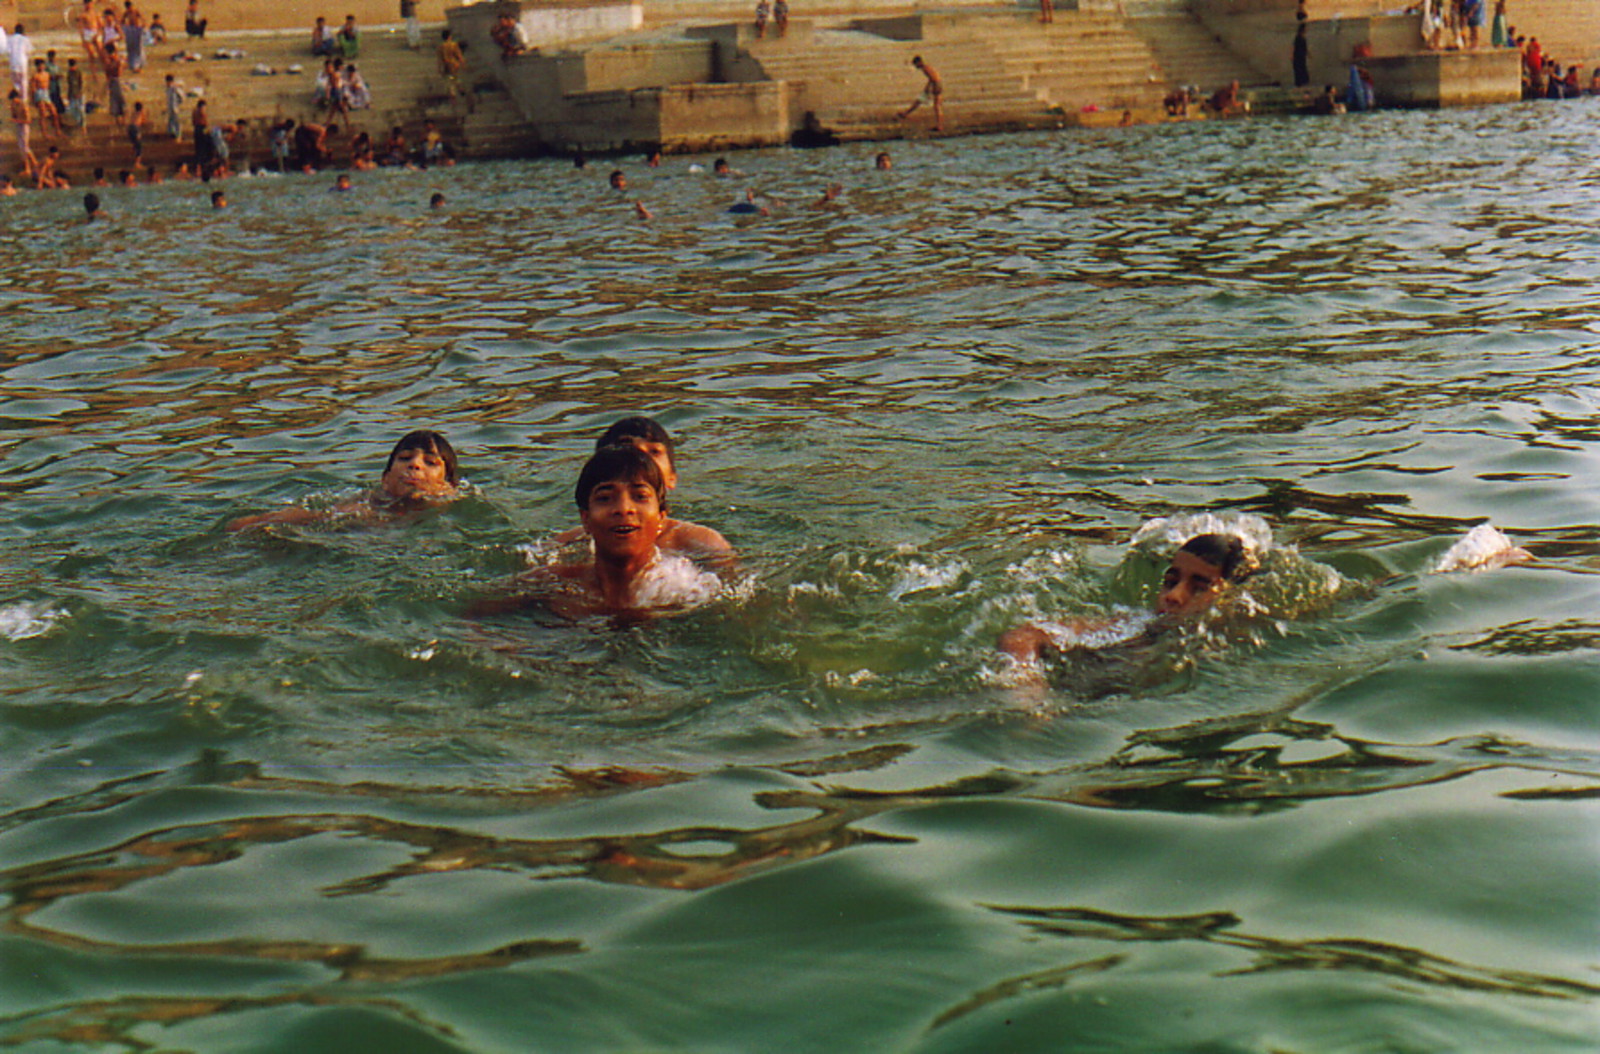 Boys swimming in the Ganges in Varanasi